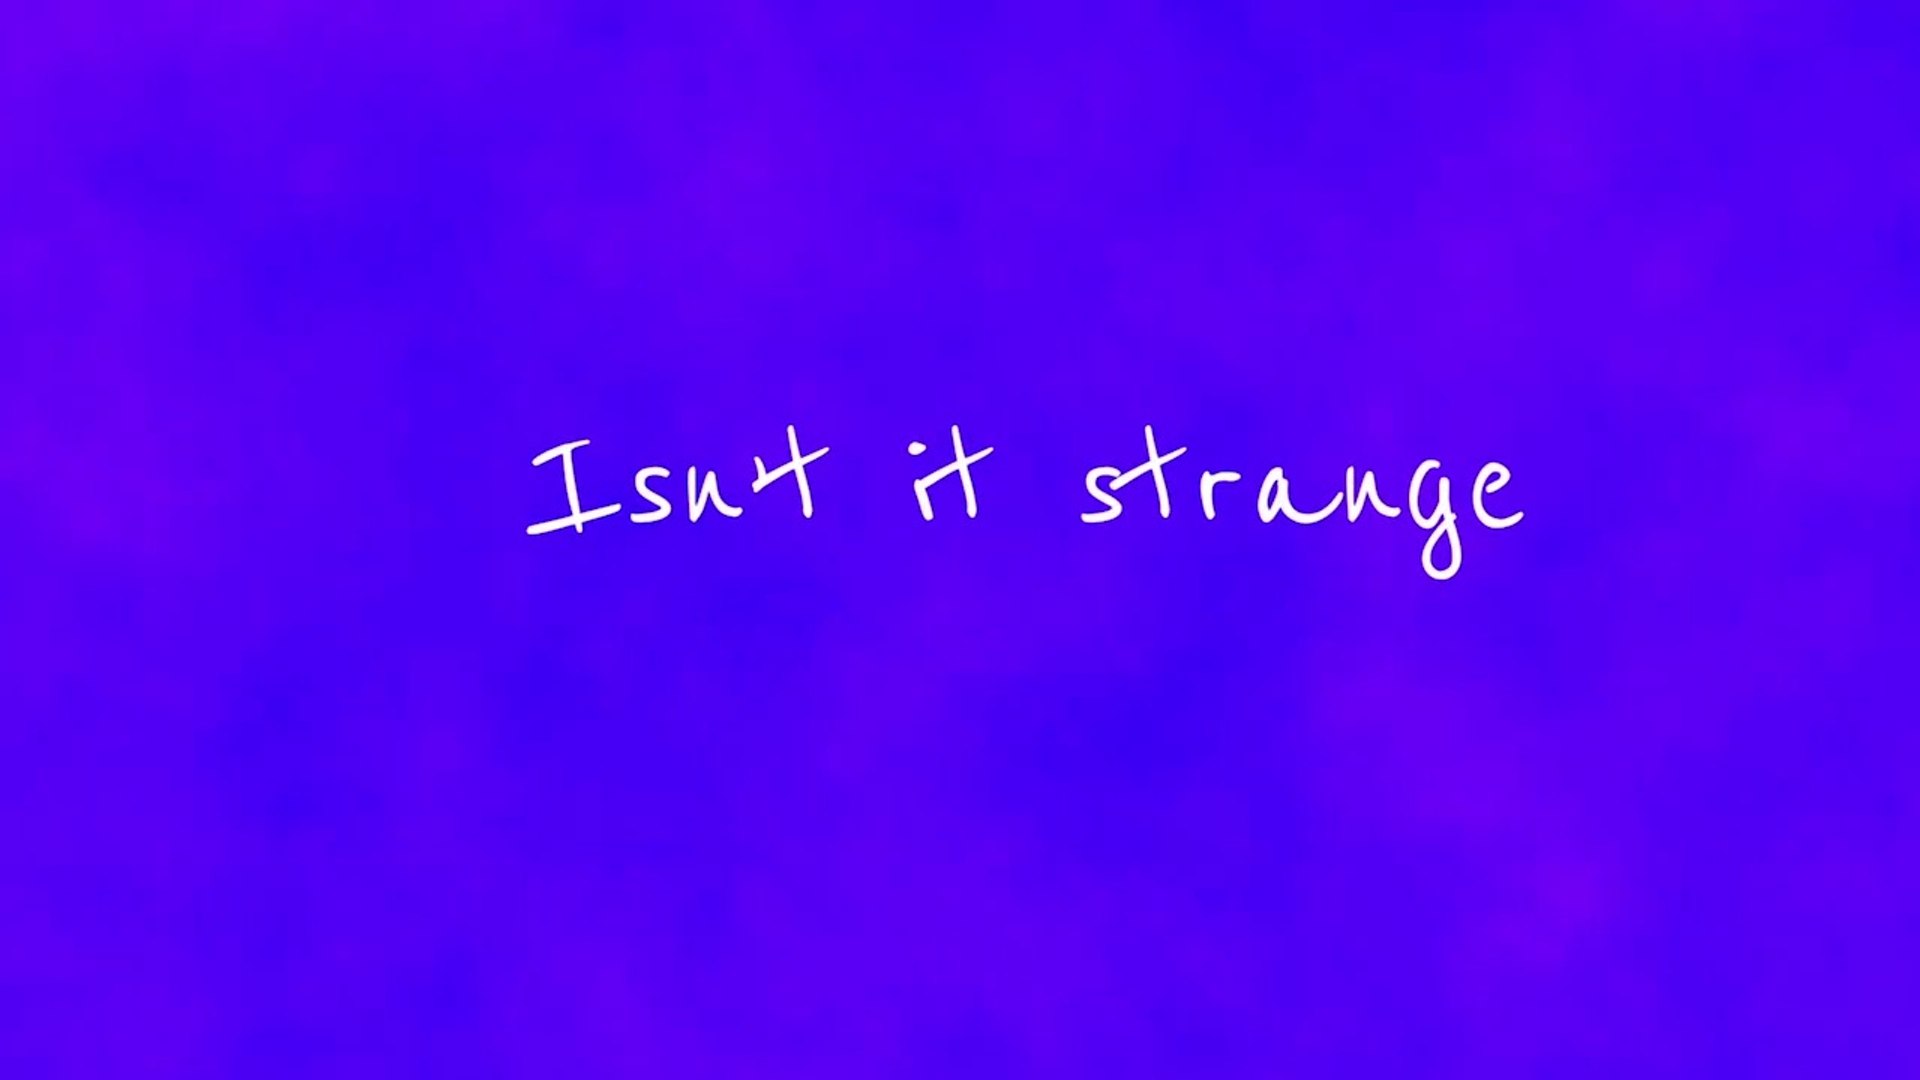 Isn't it strange - A poem - video Dailymotion